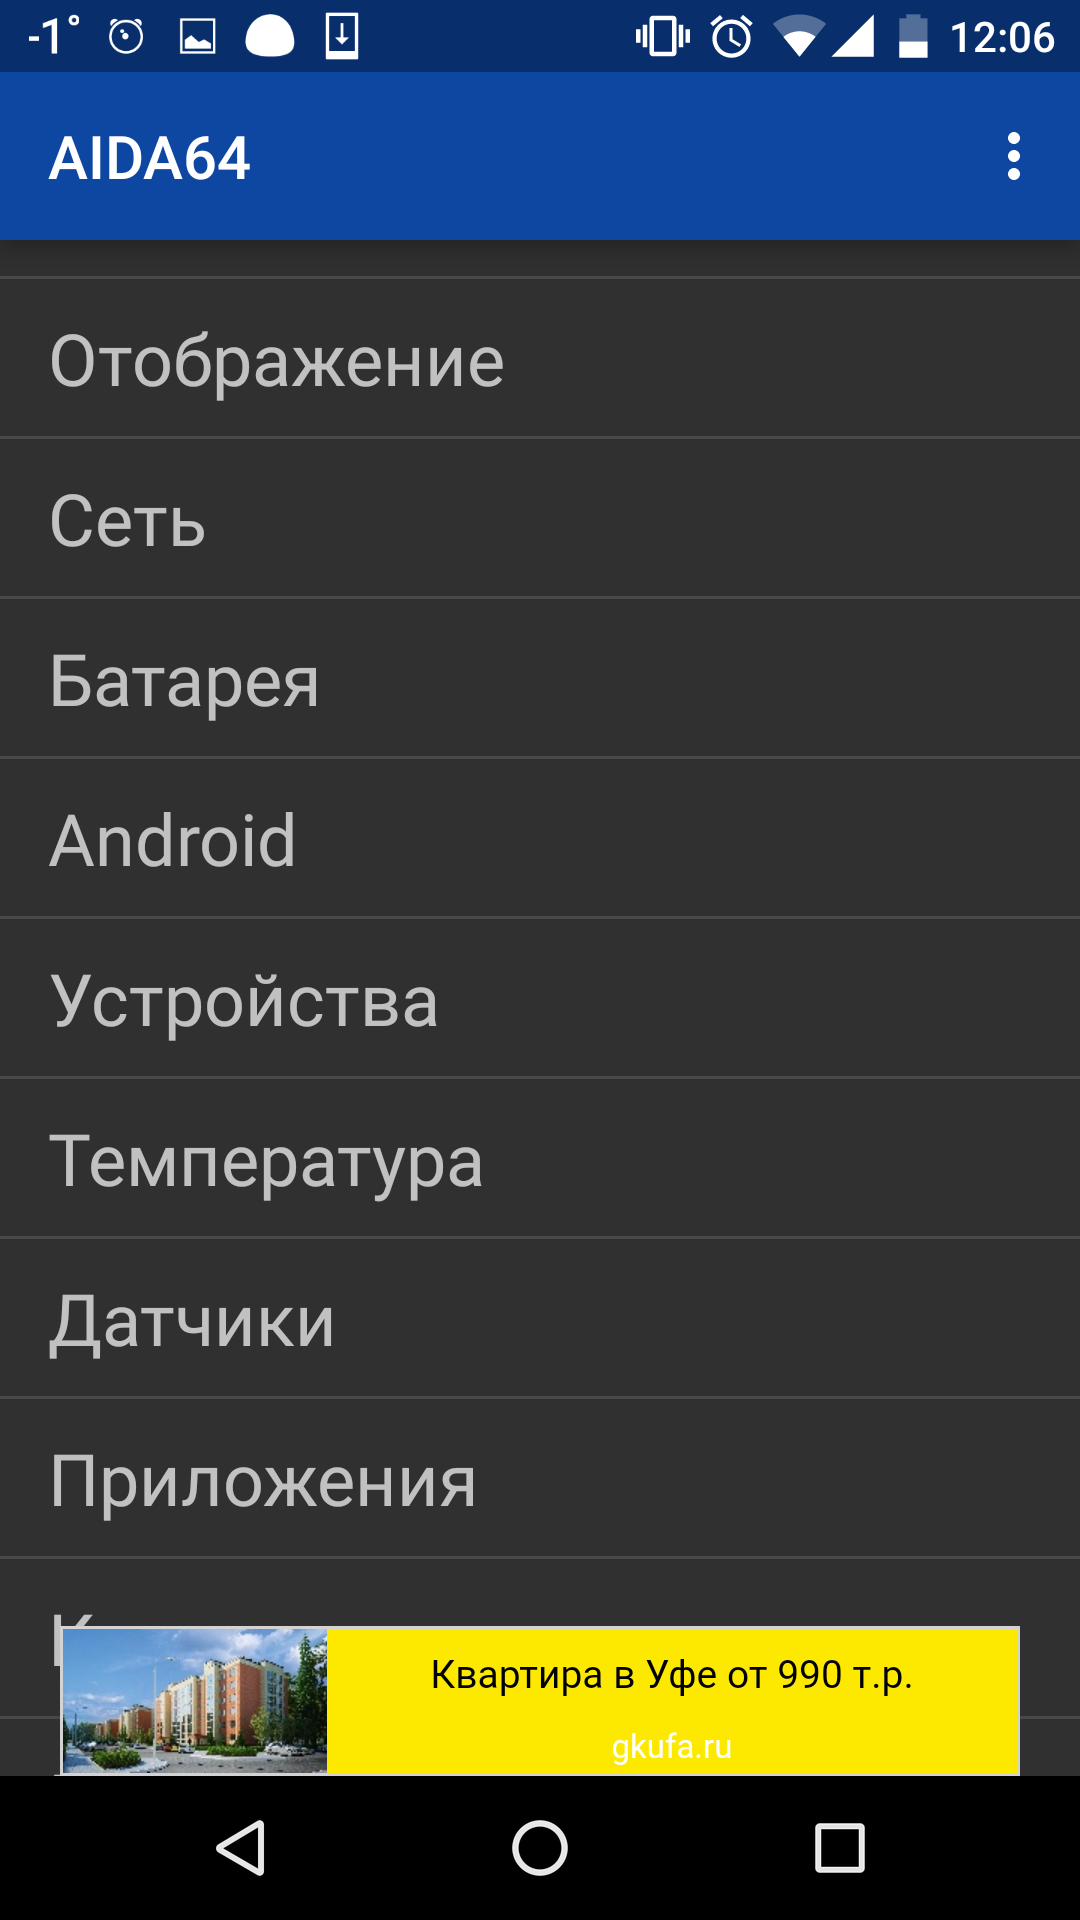 Приложения для анализа характеристик устройств "Android"